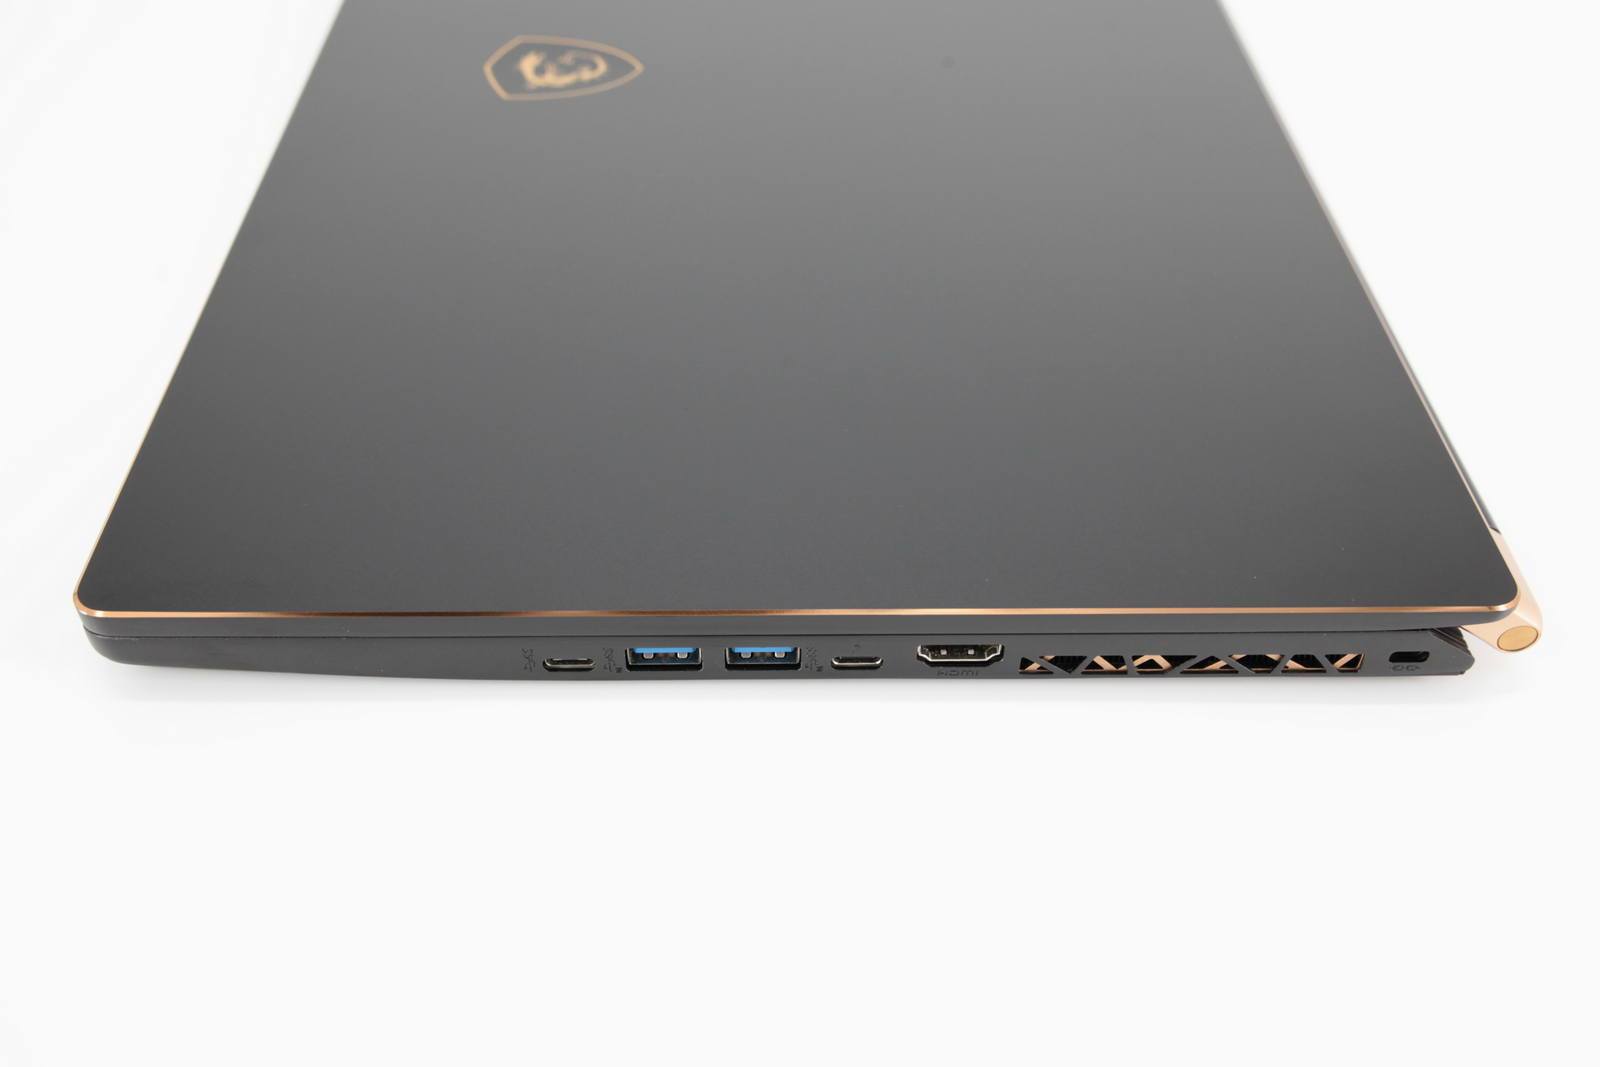 MSI GS75 RTX Gaming Laptop: Intel Core i7 8th Gen, 16GB RAM, 256GB SSD, Warranty - CruiseTech